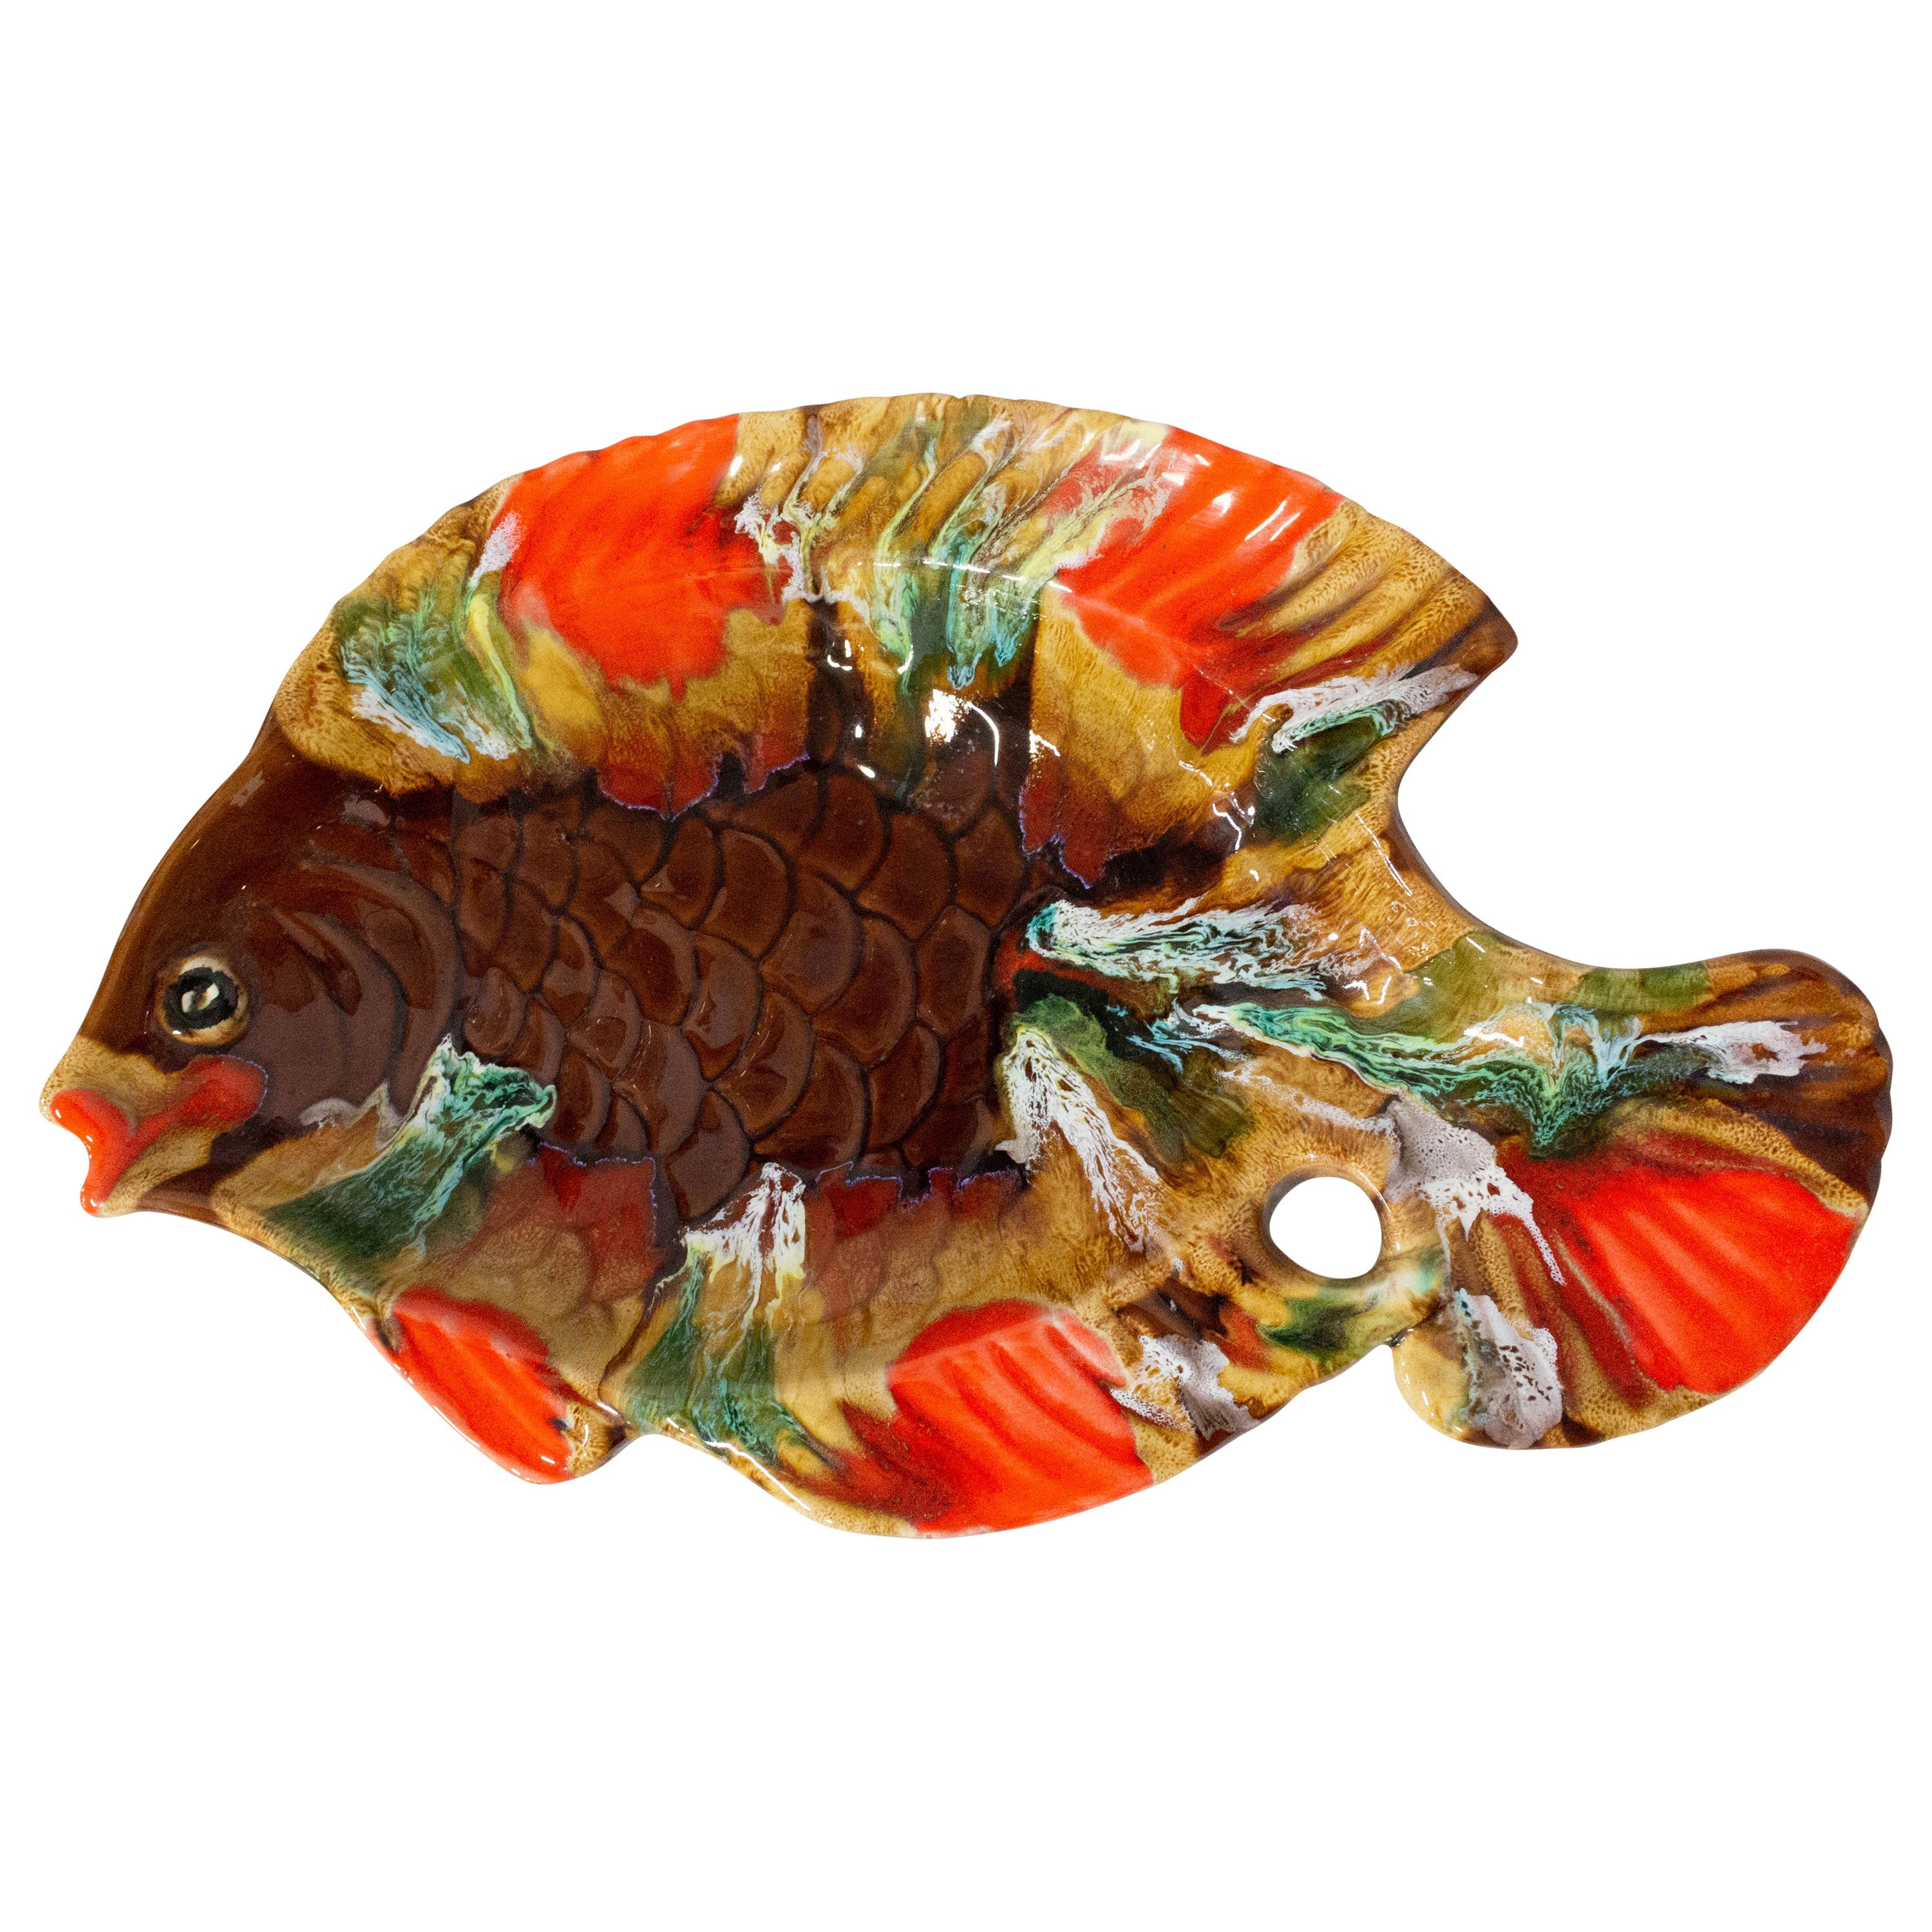 Vallauris Majolica Serving Platter or Centerpiece Fish Design Midcentury